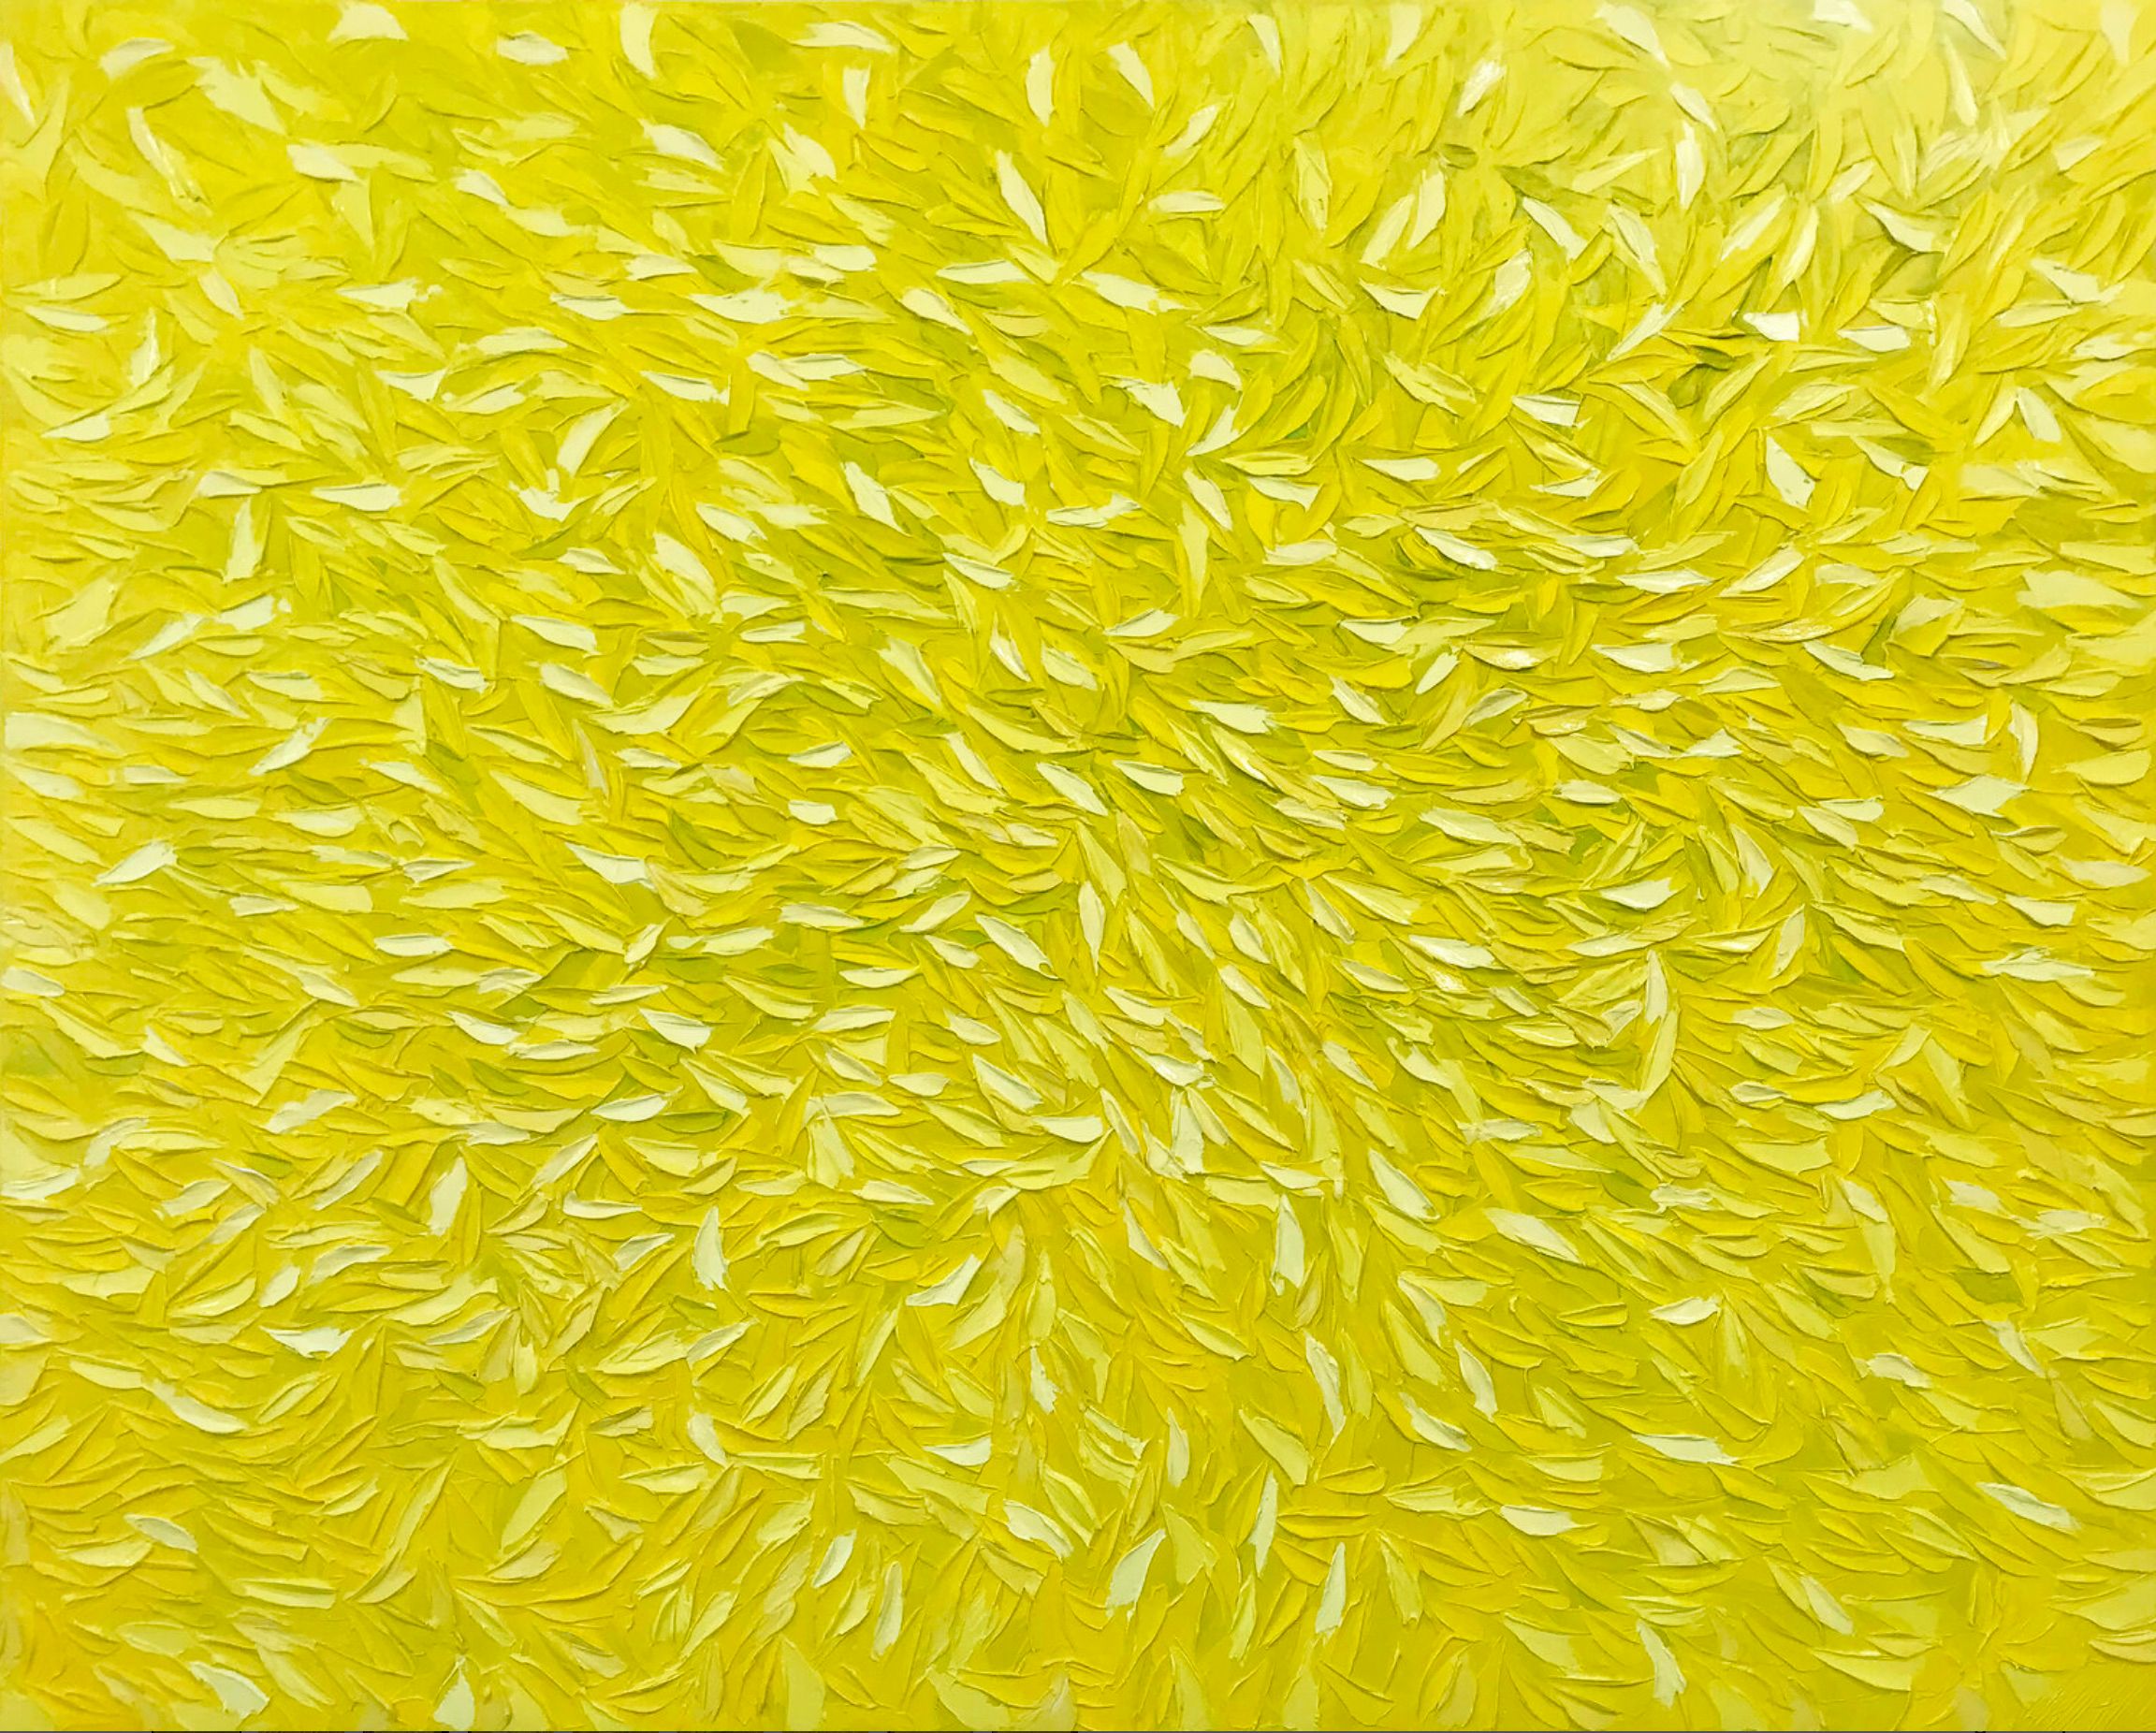 Oliver Messas "Lumière d'été..." Pittura astratta foglie gialle